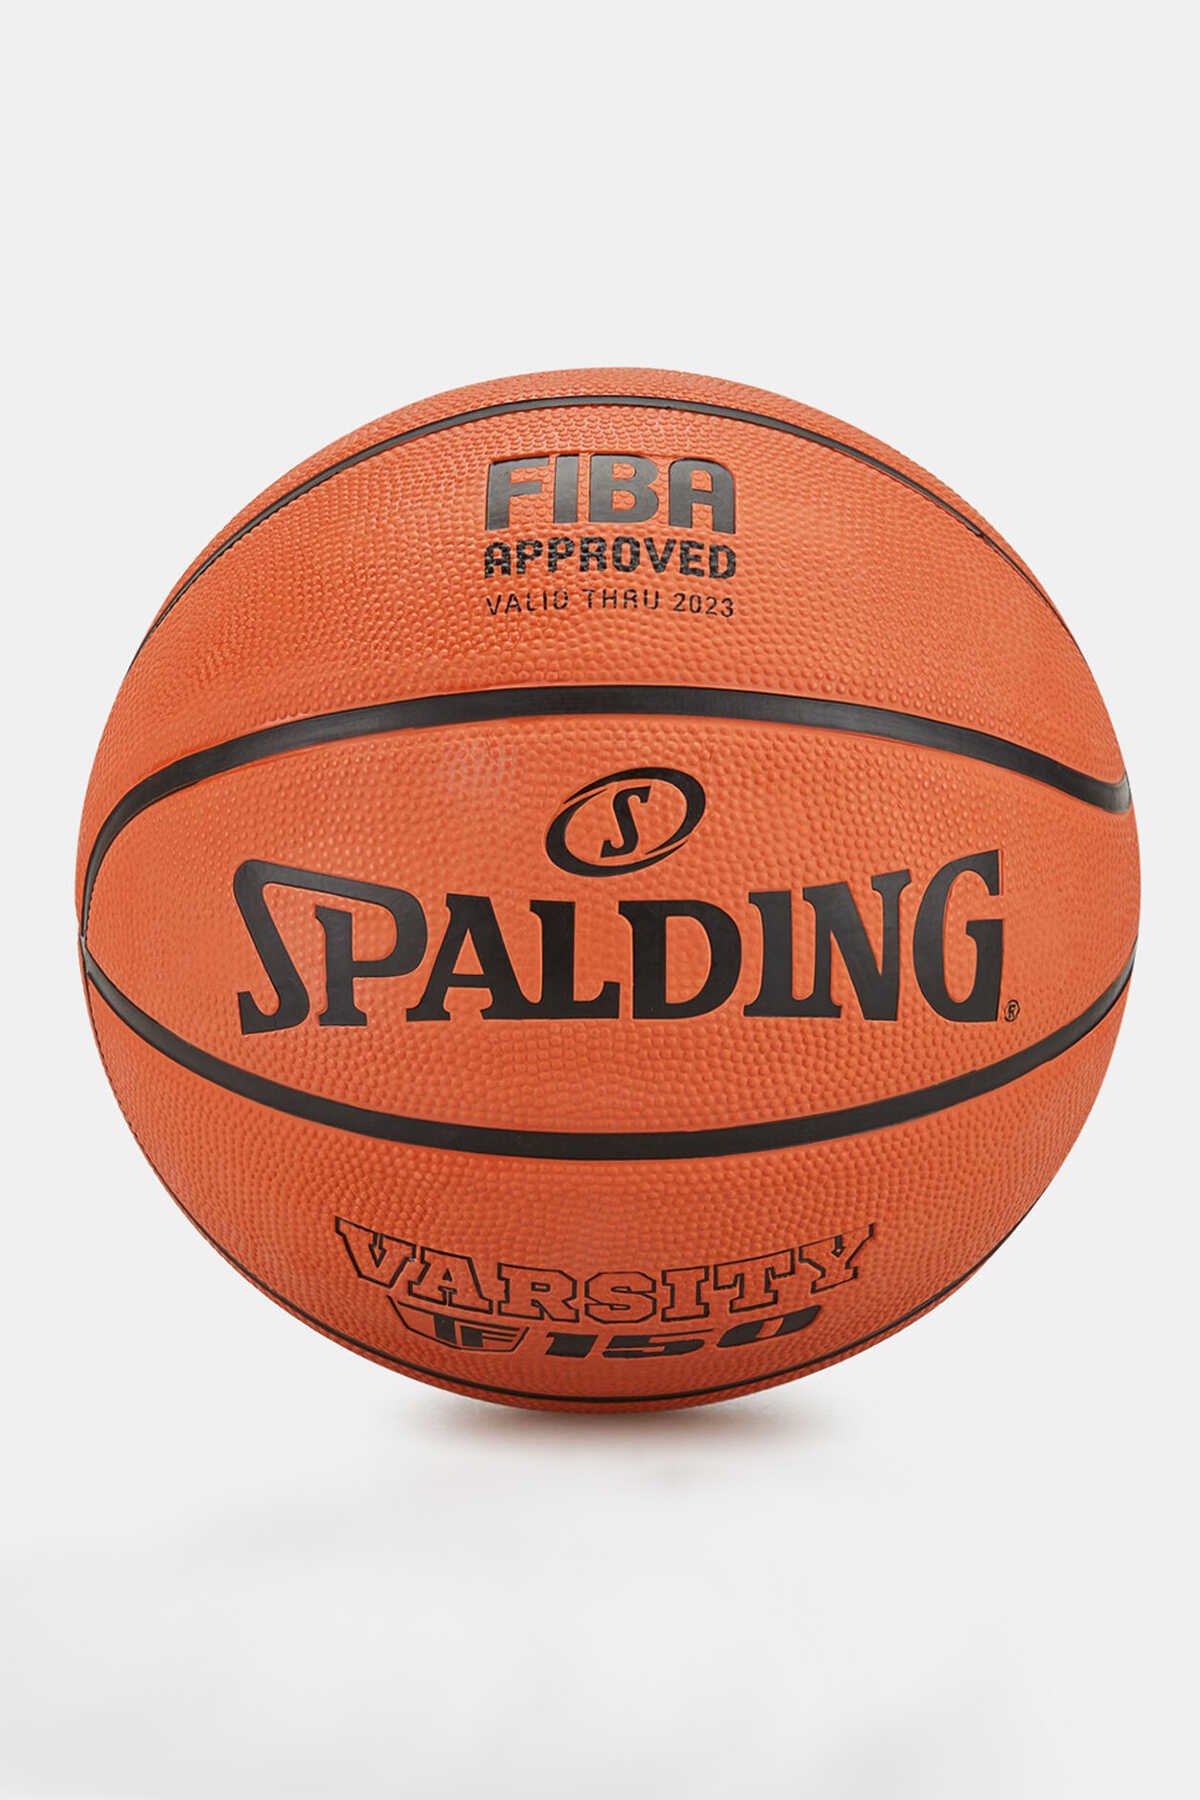 Spalding - Spalding TF-150 Basketbol Topu Varsity Size:5 FIBA Onaylı ( Basketbol Topları STD